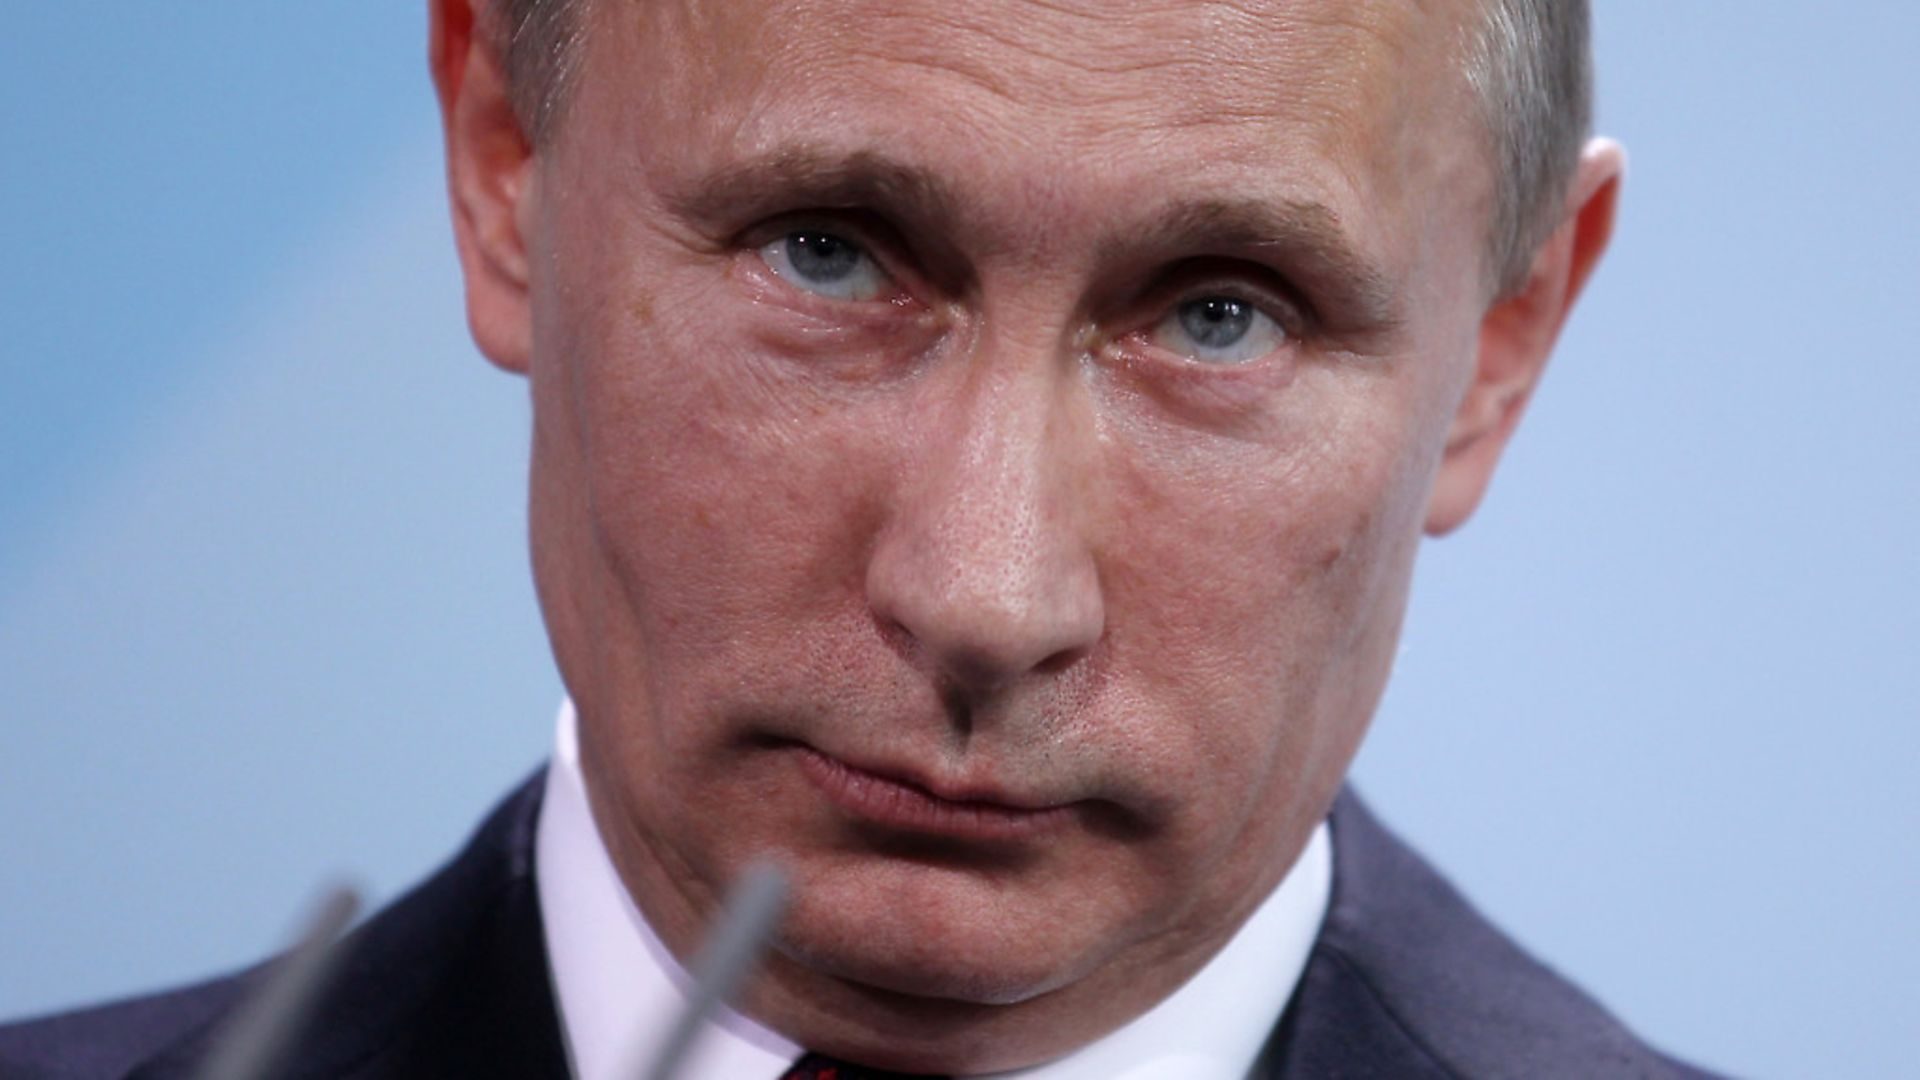 Vladimir Putin. Picture: PA - Credit: DPA/PA Images